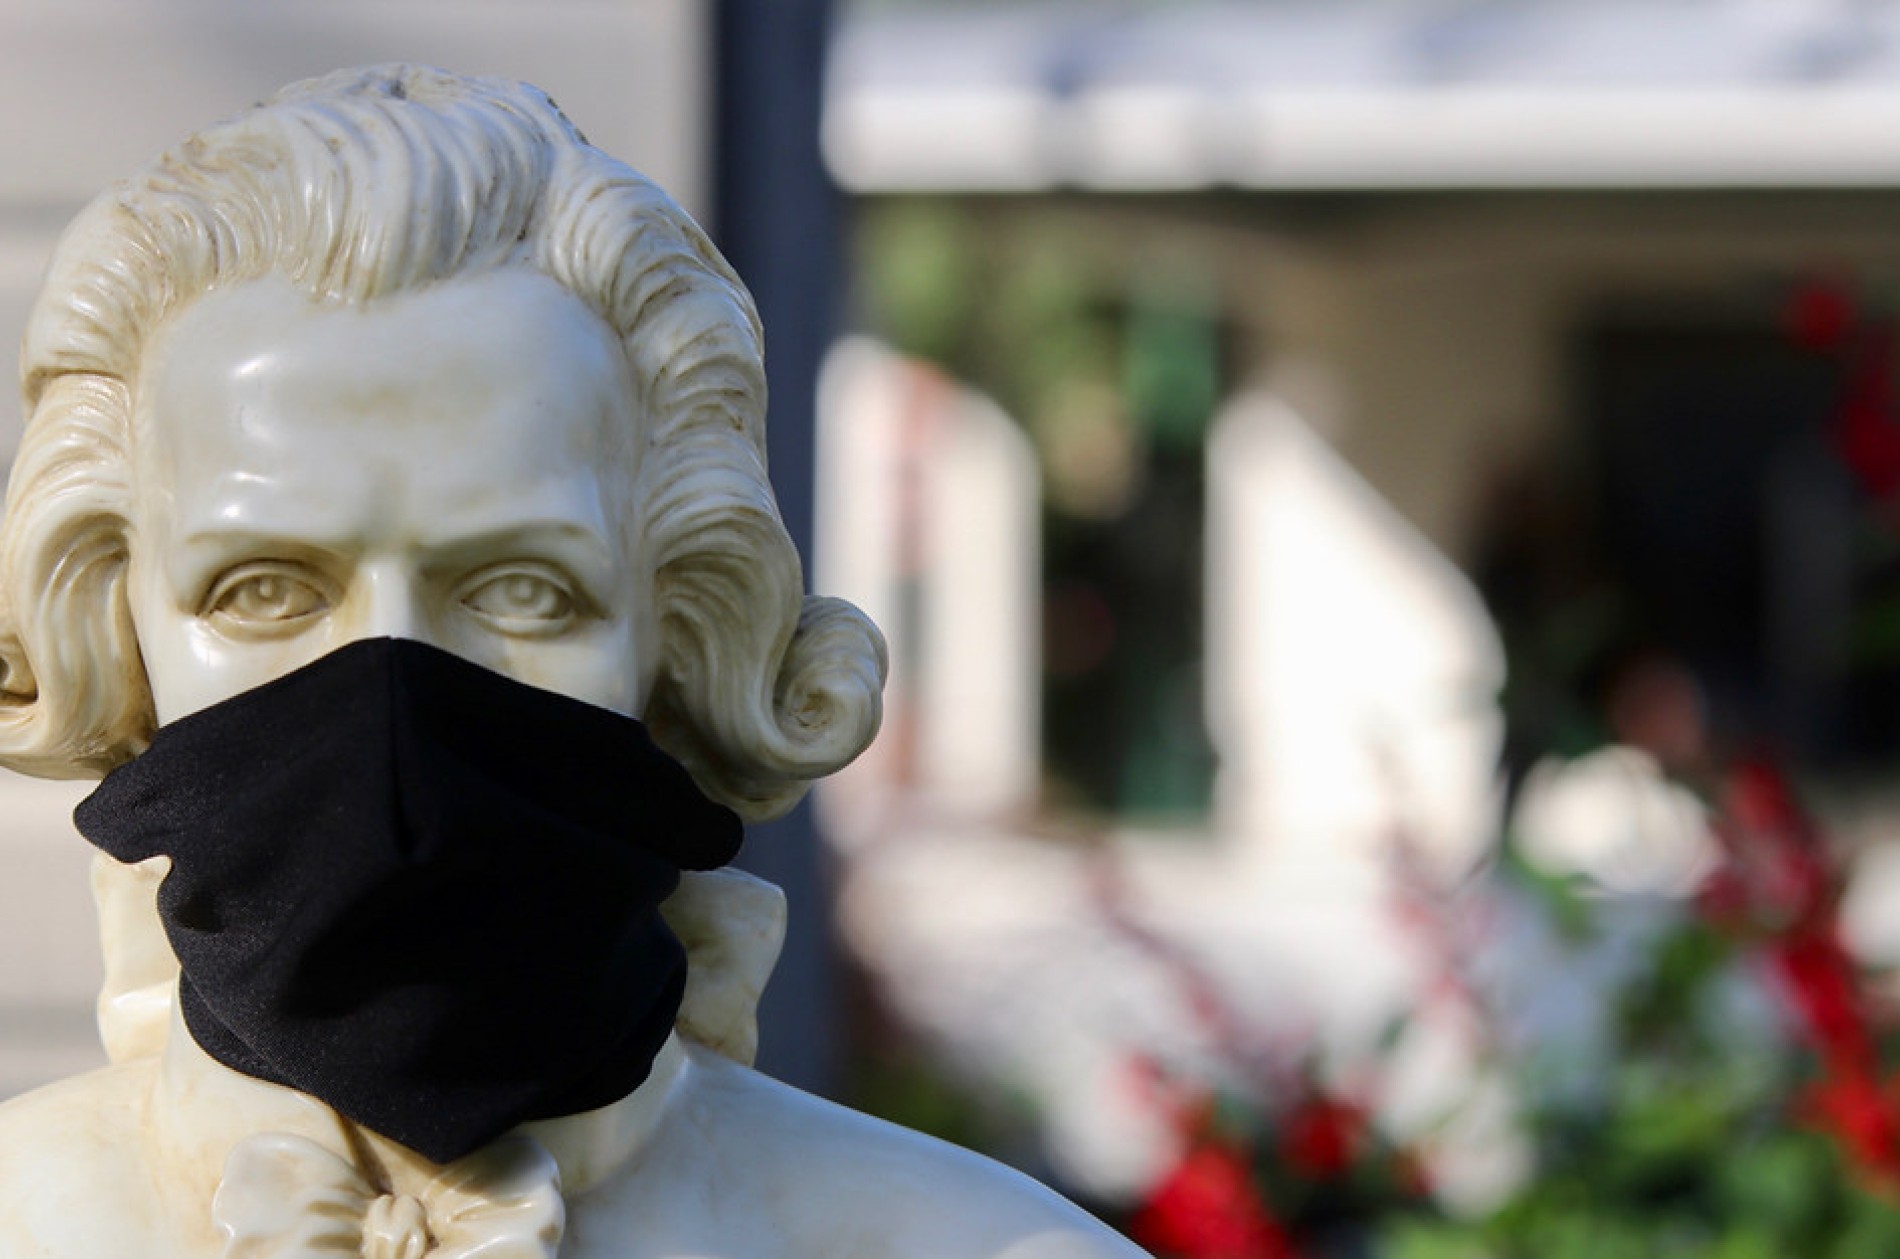 Mozart bust wearing black mask